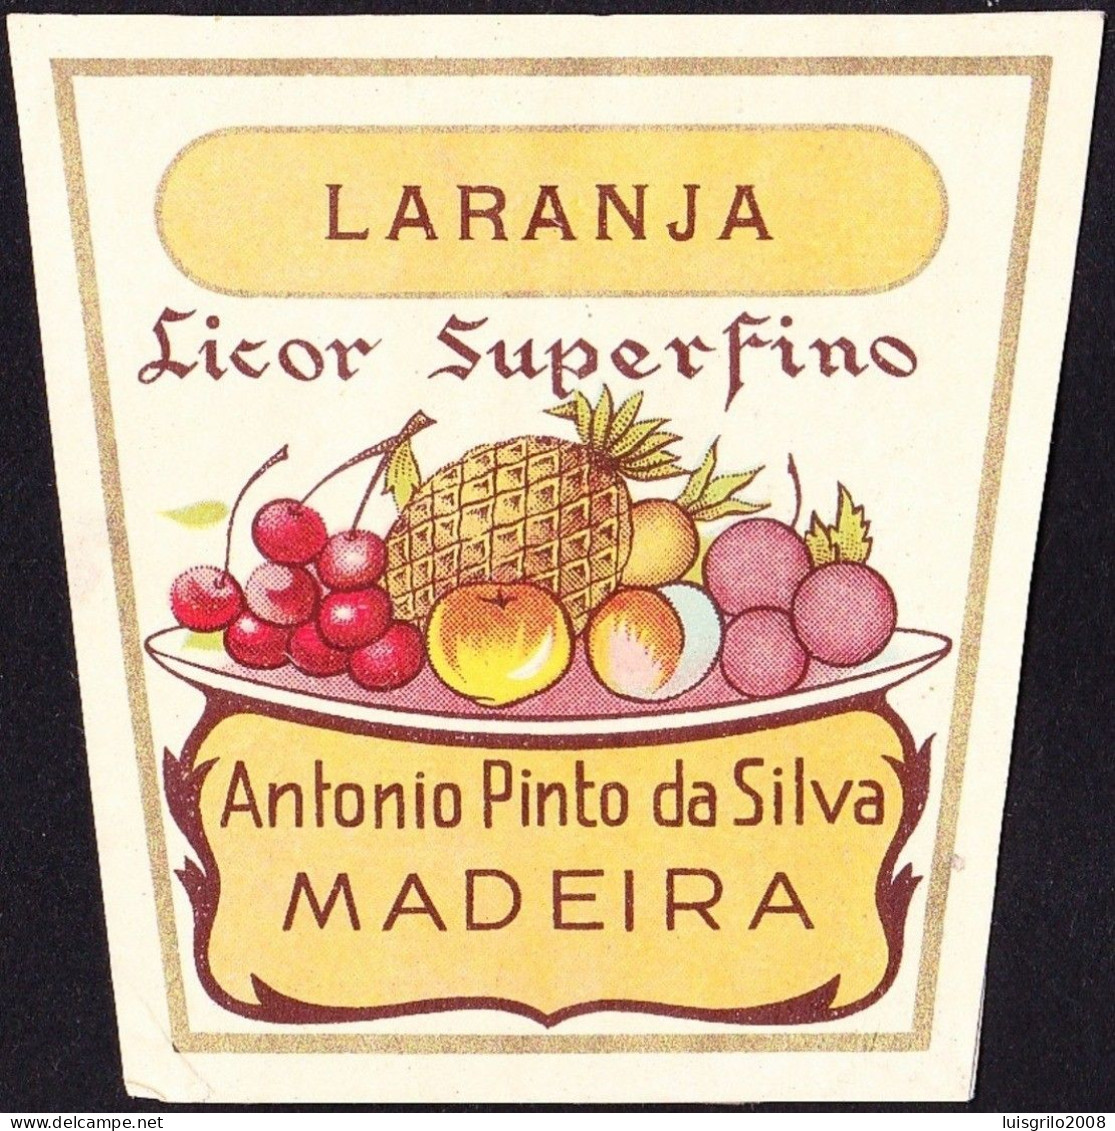 Old Liquor Label, Portugal - LARANJA. Licor Superfino. Funchal, Madeira Island - Alcools & Spiritueux